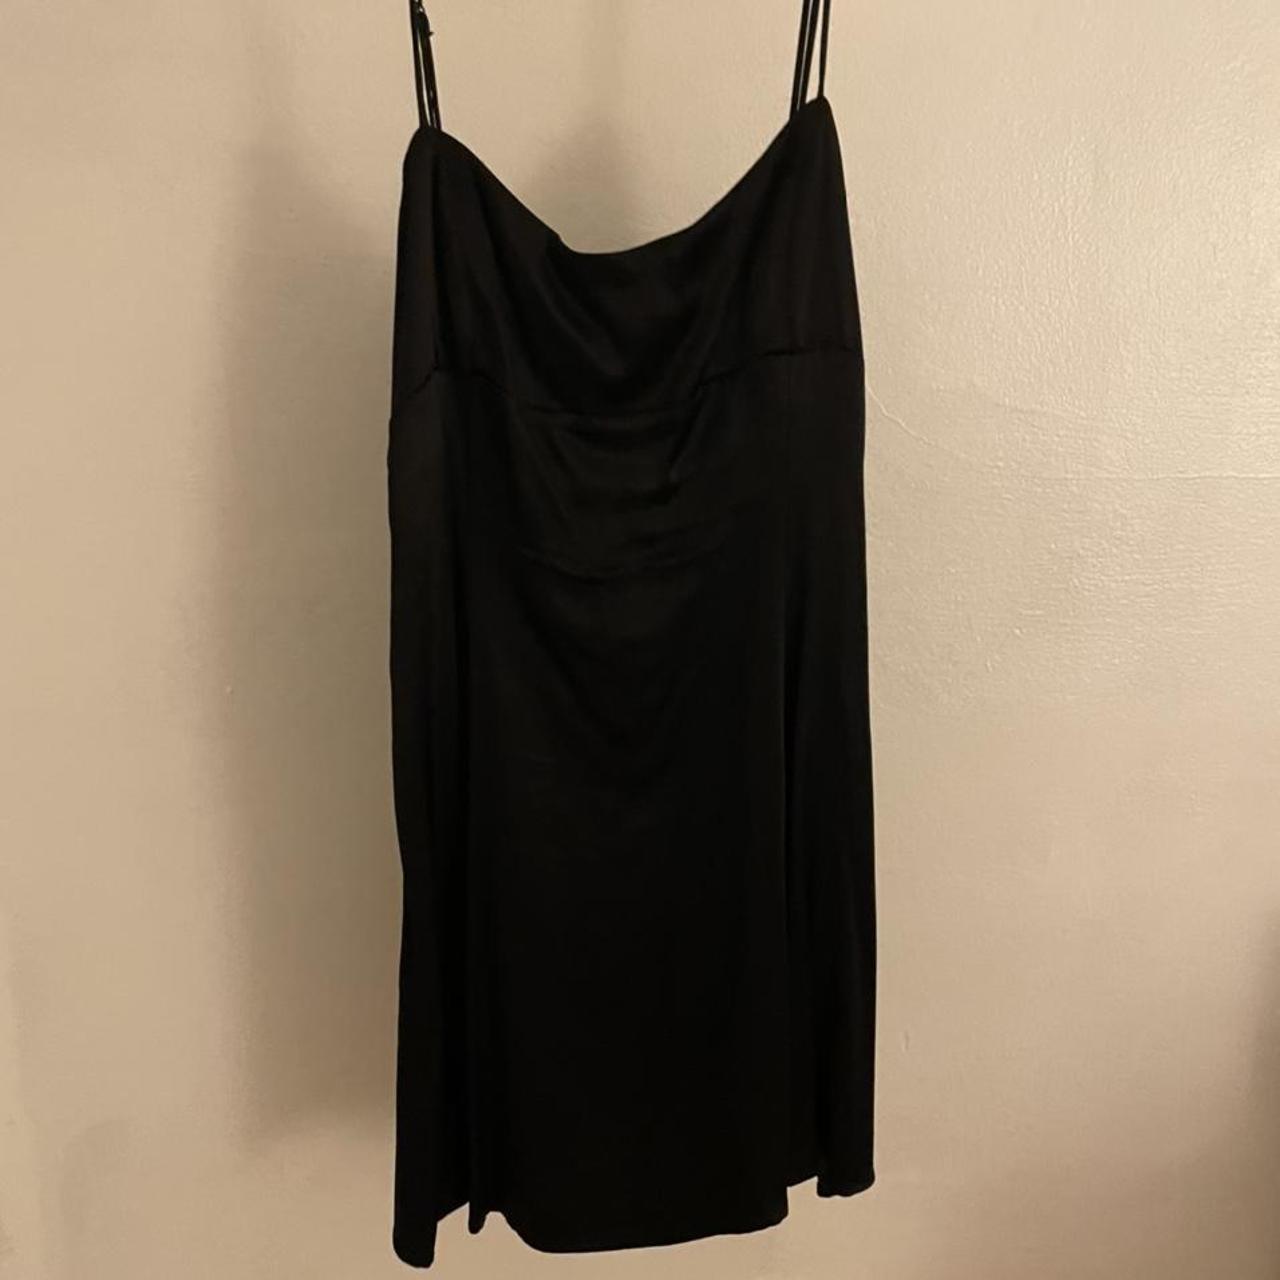 Zara black satin dress 🖤 this is literally the... - Depop